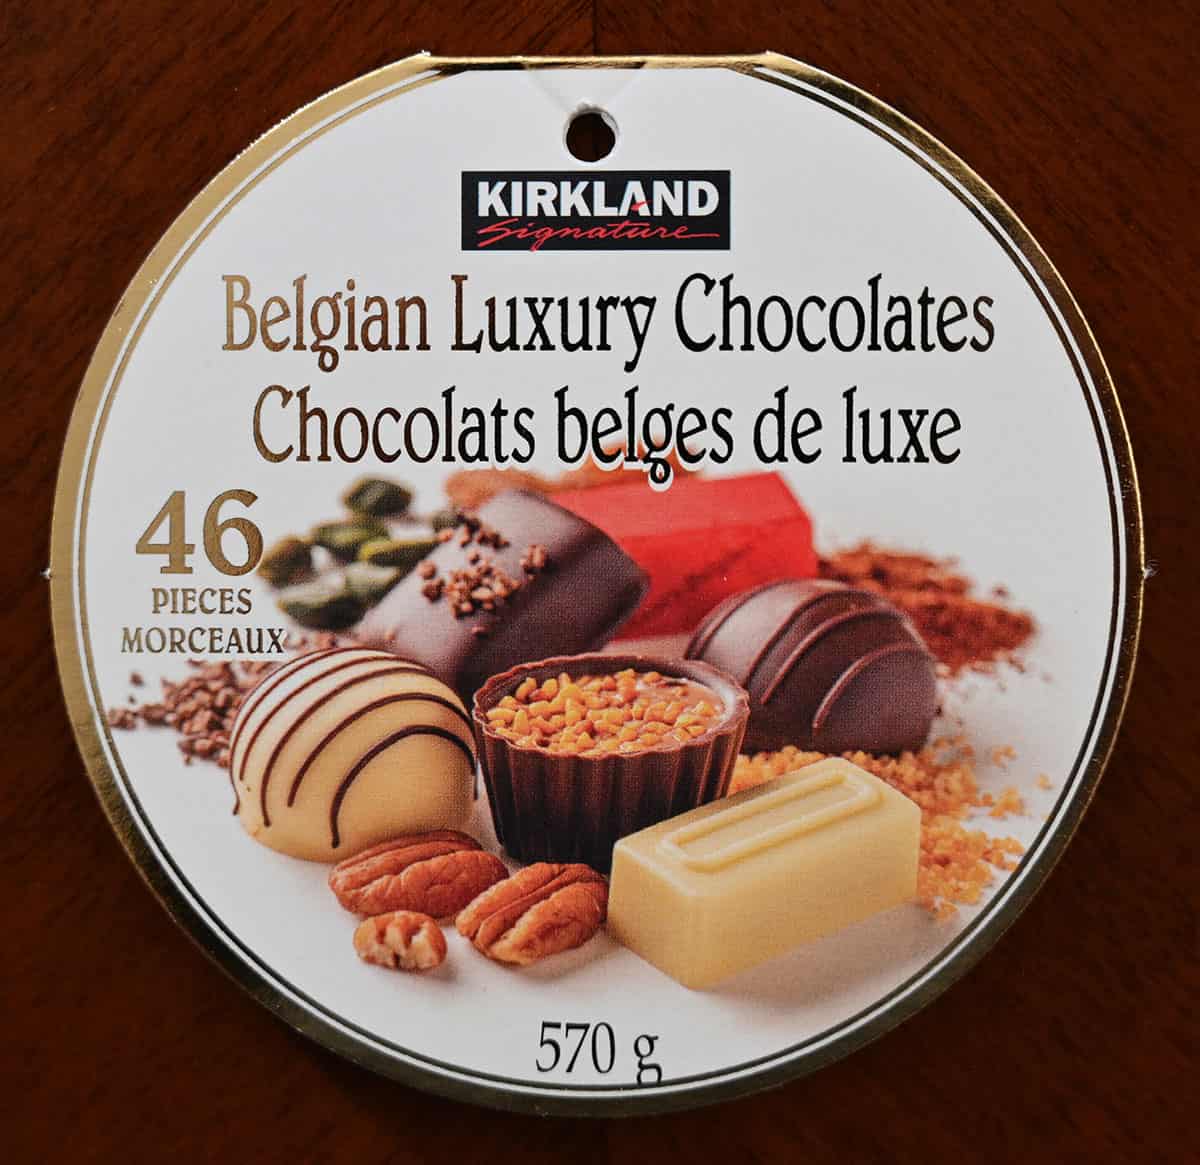 Costco Kirkland Signature Belgian Luxury Chocolates Review - Costcuisine